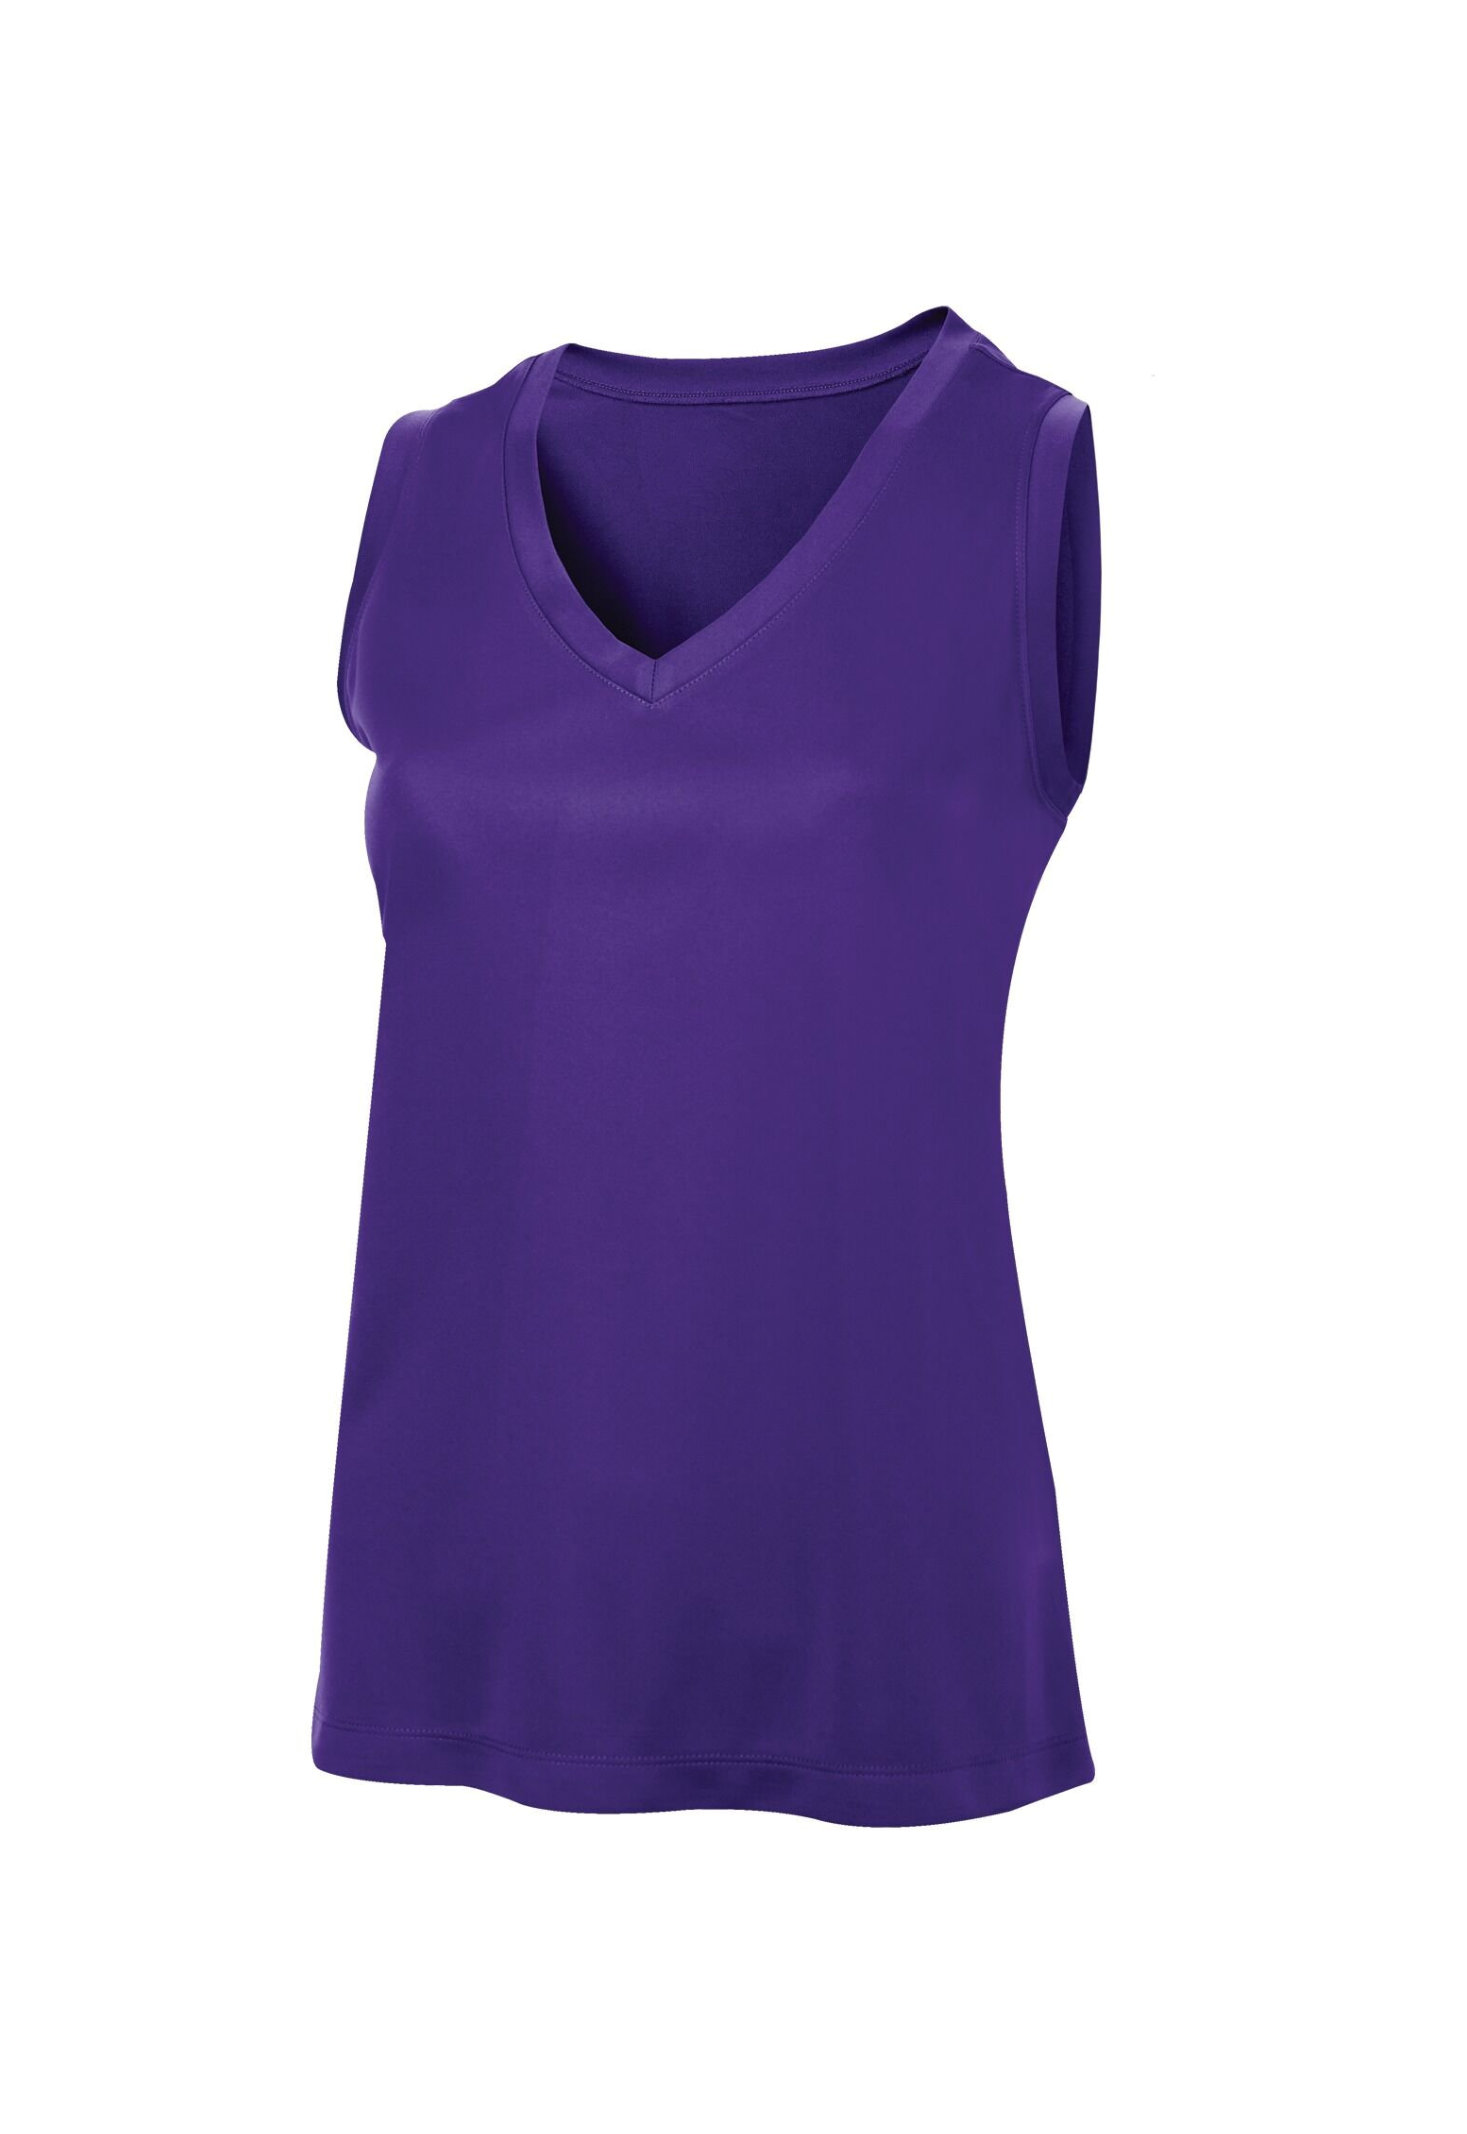 zanvin Womens tops, Puls-Size Crew neck Button Sleeveless Vest Printing  Short T-Shirt Sling Tops,Purple